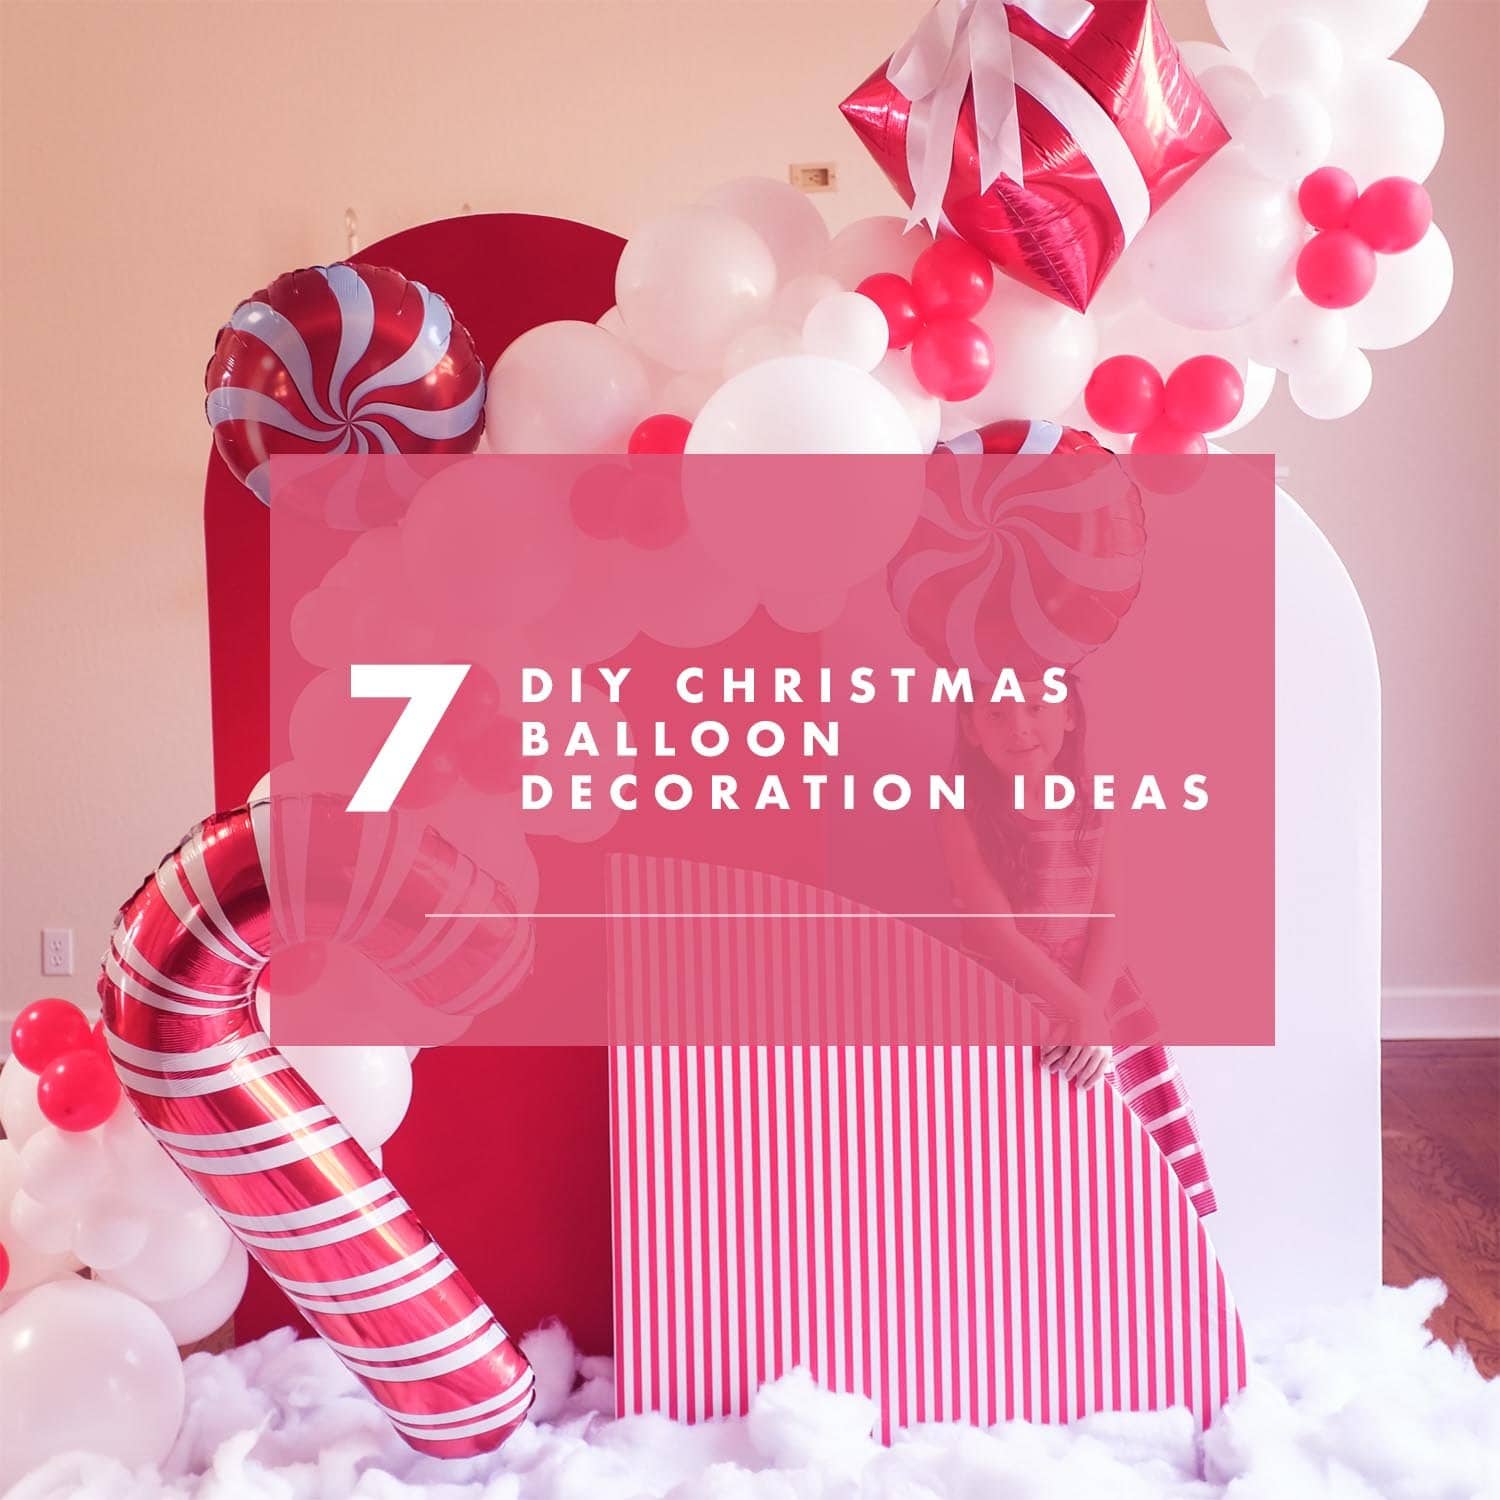 7 DIY Christmas Balloon Decoration Ideas